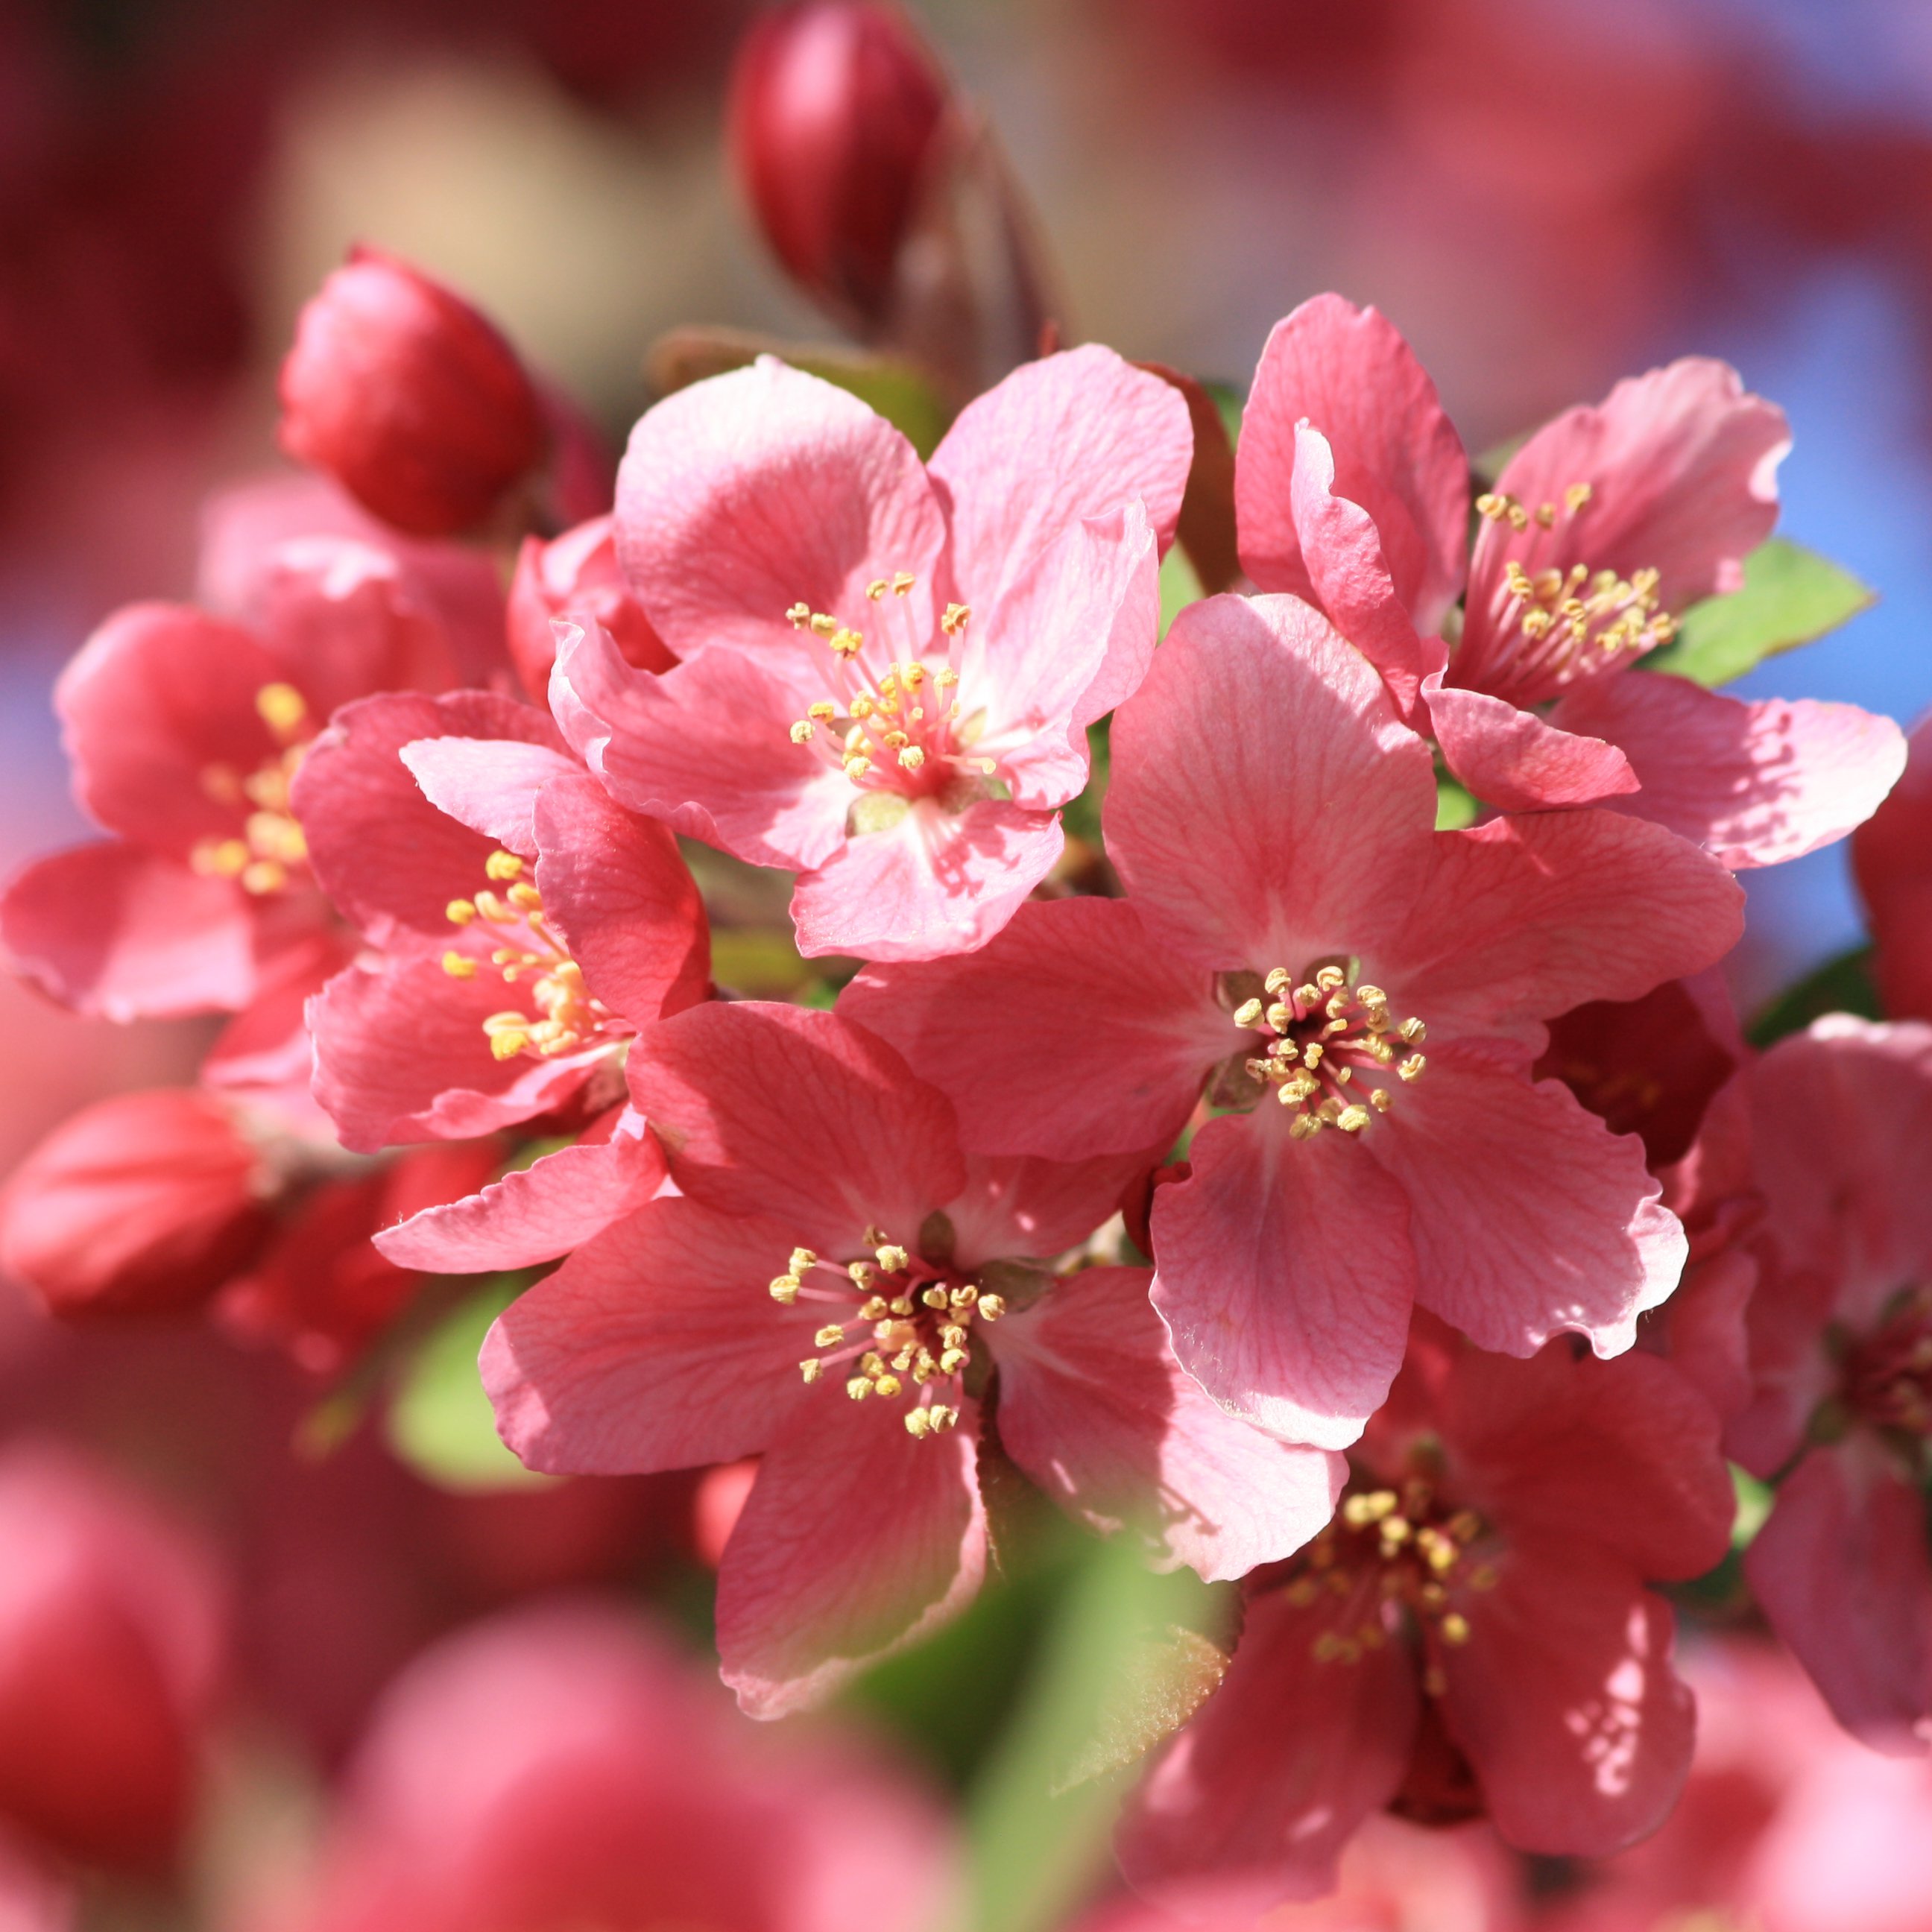 Coral Pink Blossoms Picture | Free Photograph | Photos Public Domain